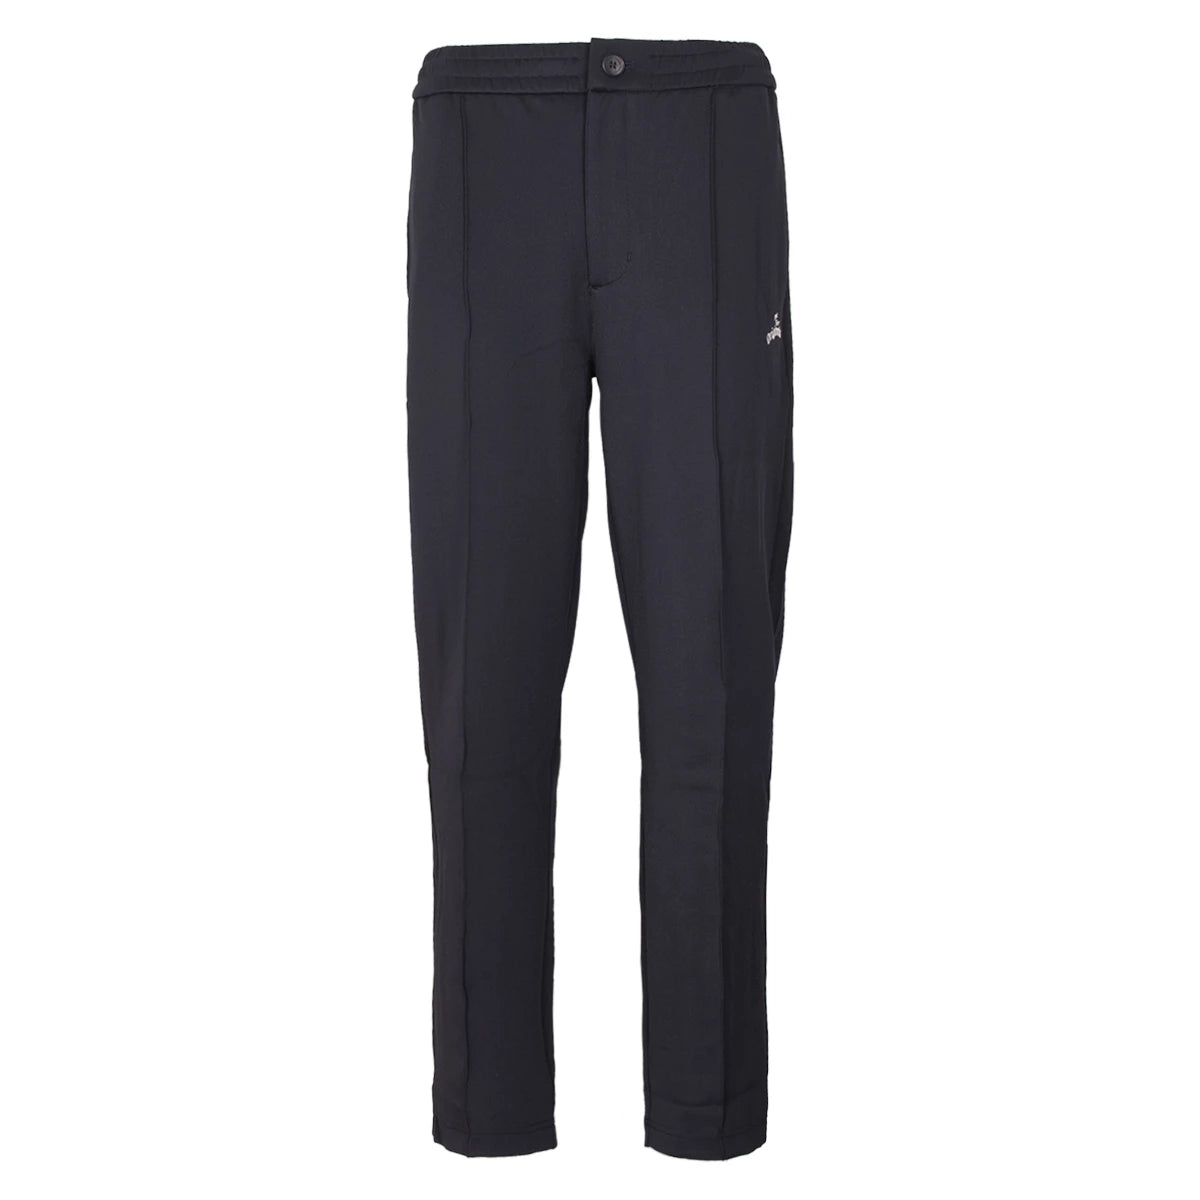 The New Originals Pantalon donkerblauw | Workman track pants